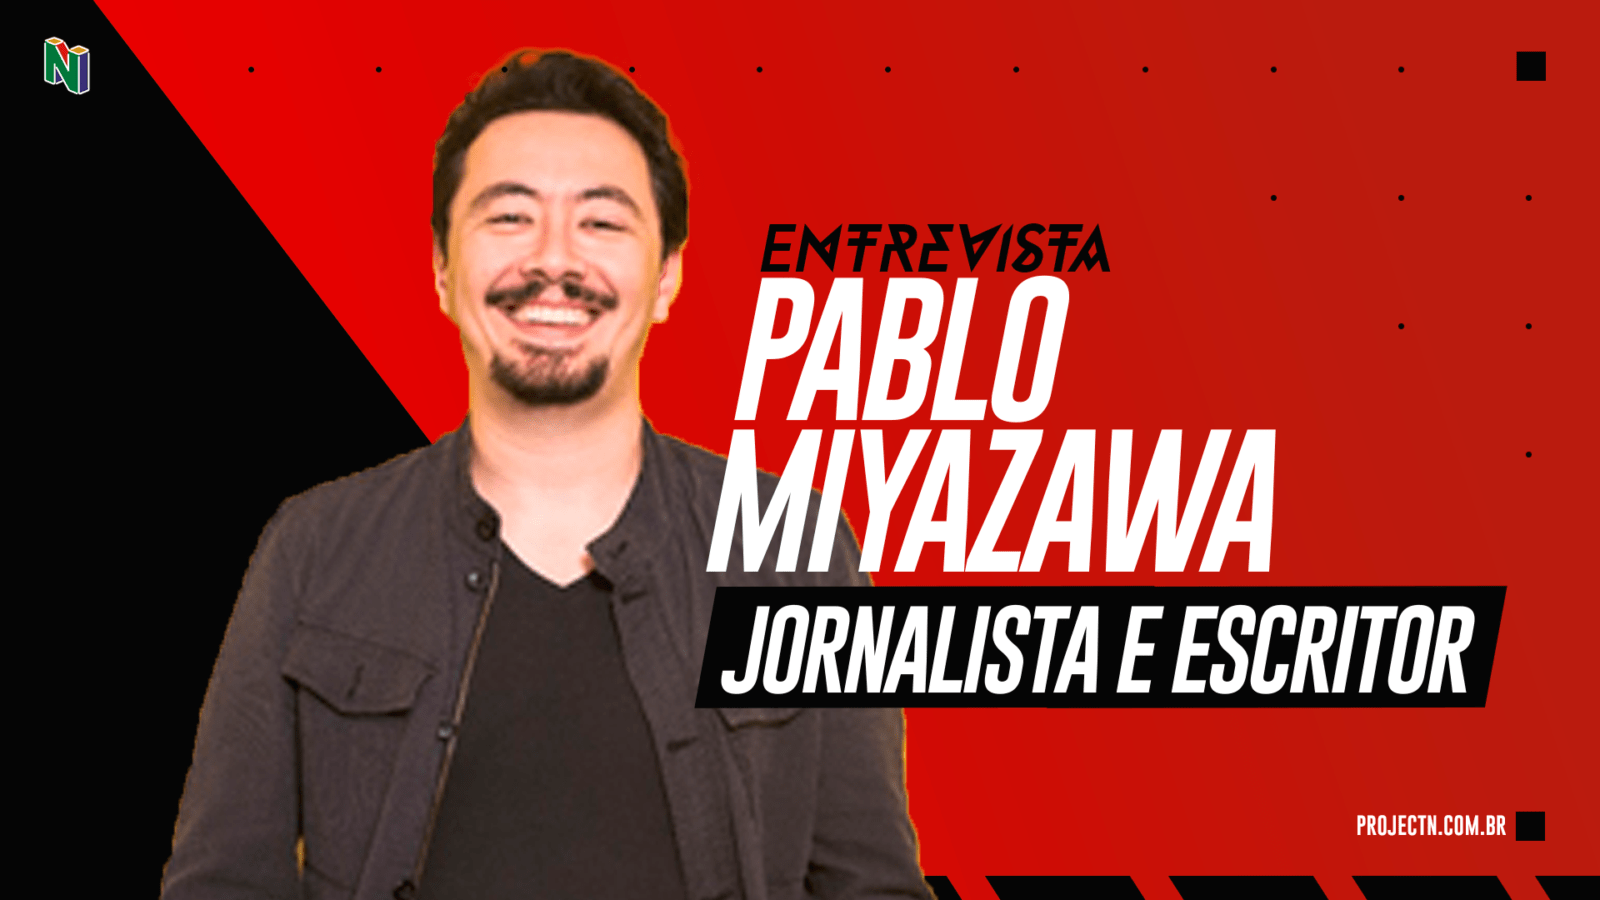 [Entrevista] Pablo Miyazawa: A importância da Nintendo World para o Nintendismo no Brasil